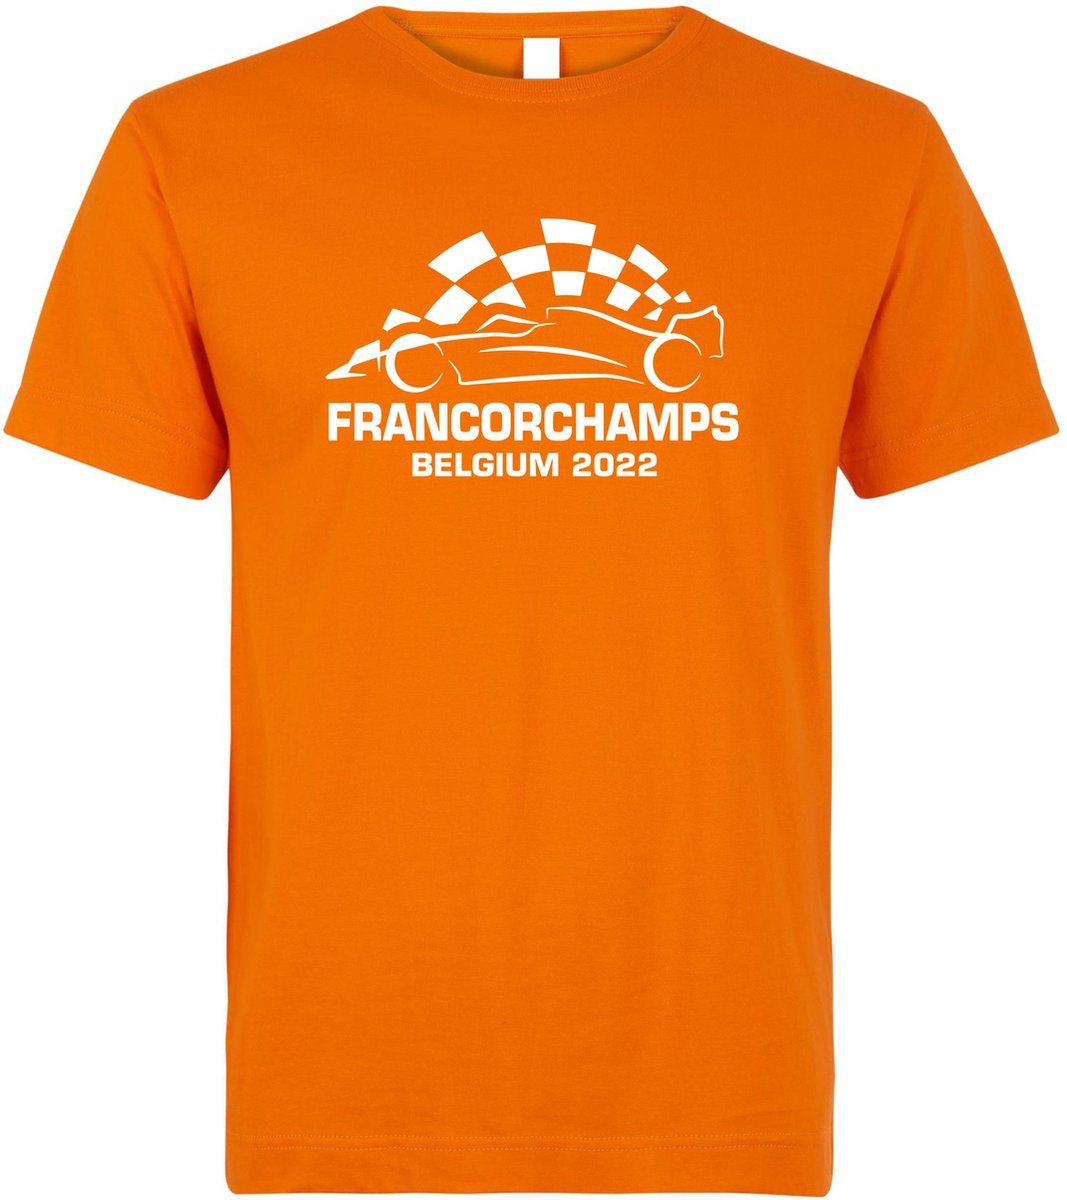 T-shirt Francorchamps Belgium 2022 met raceauto | Max Verstappen / Red Bull Racing / Formule 1 fan | Grand Prix Circuit Spa-Francorchamps | kleding shirt | Oranje | maat XXL